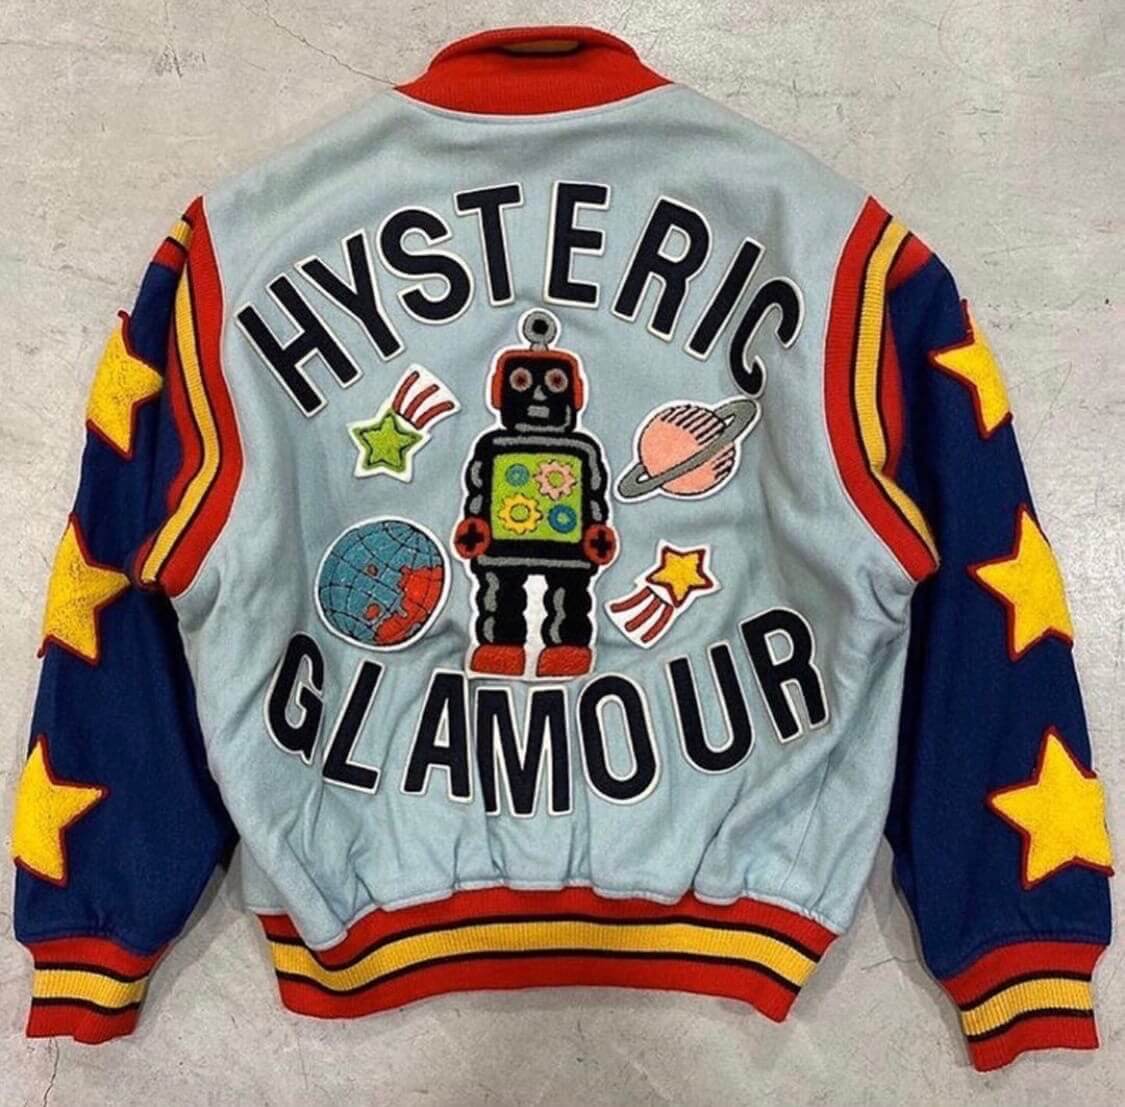 Vintage Hysteric Glamour Atomic Robot Varsity Jacket - Maker of Jacket